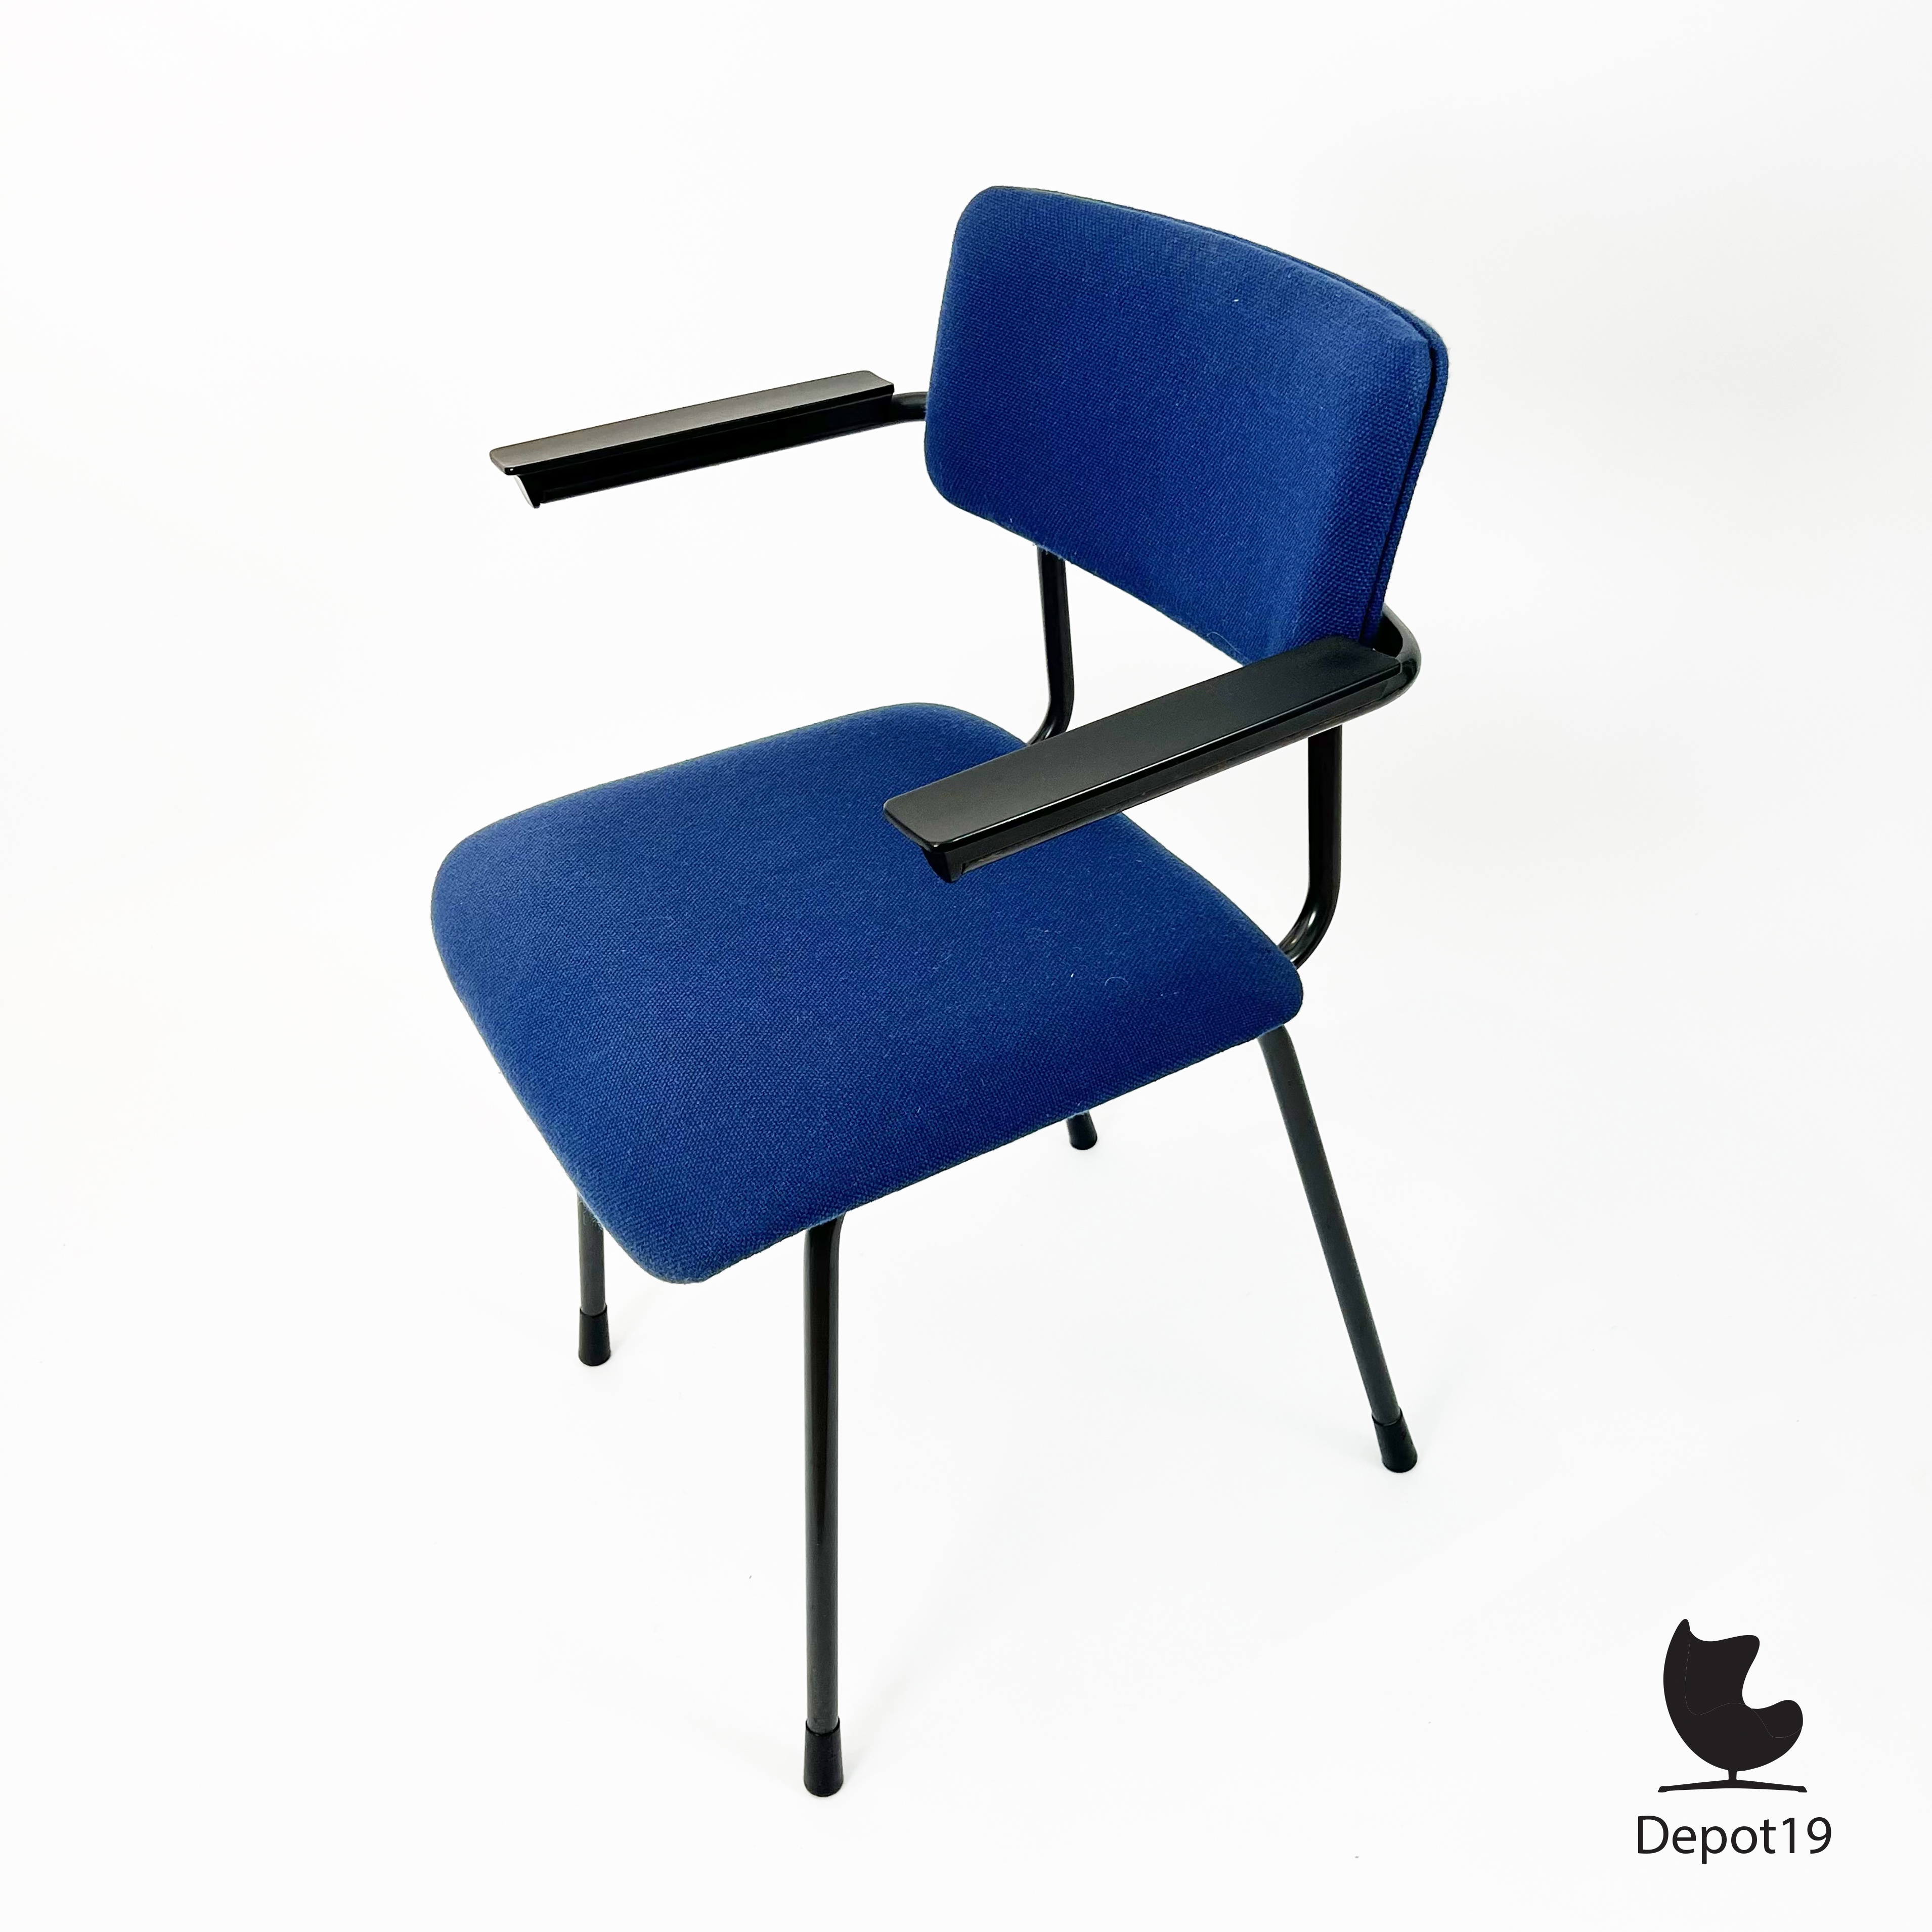 globaal registreren Overeenstemming Gispen 1235 stoel ontwerp Andre Cordemeyer 1960s blauw | Depot 19